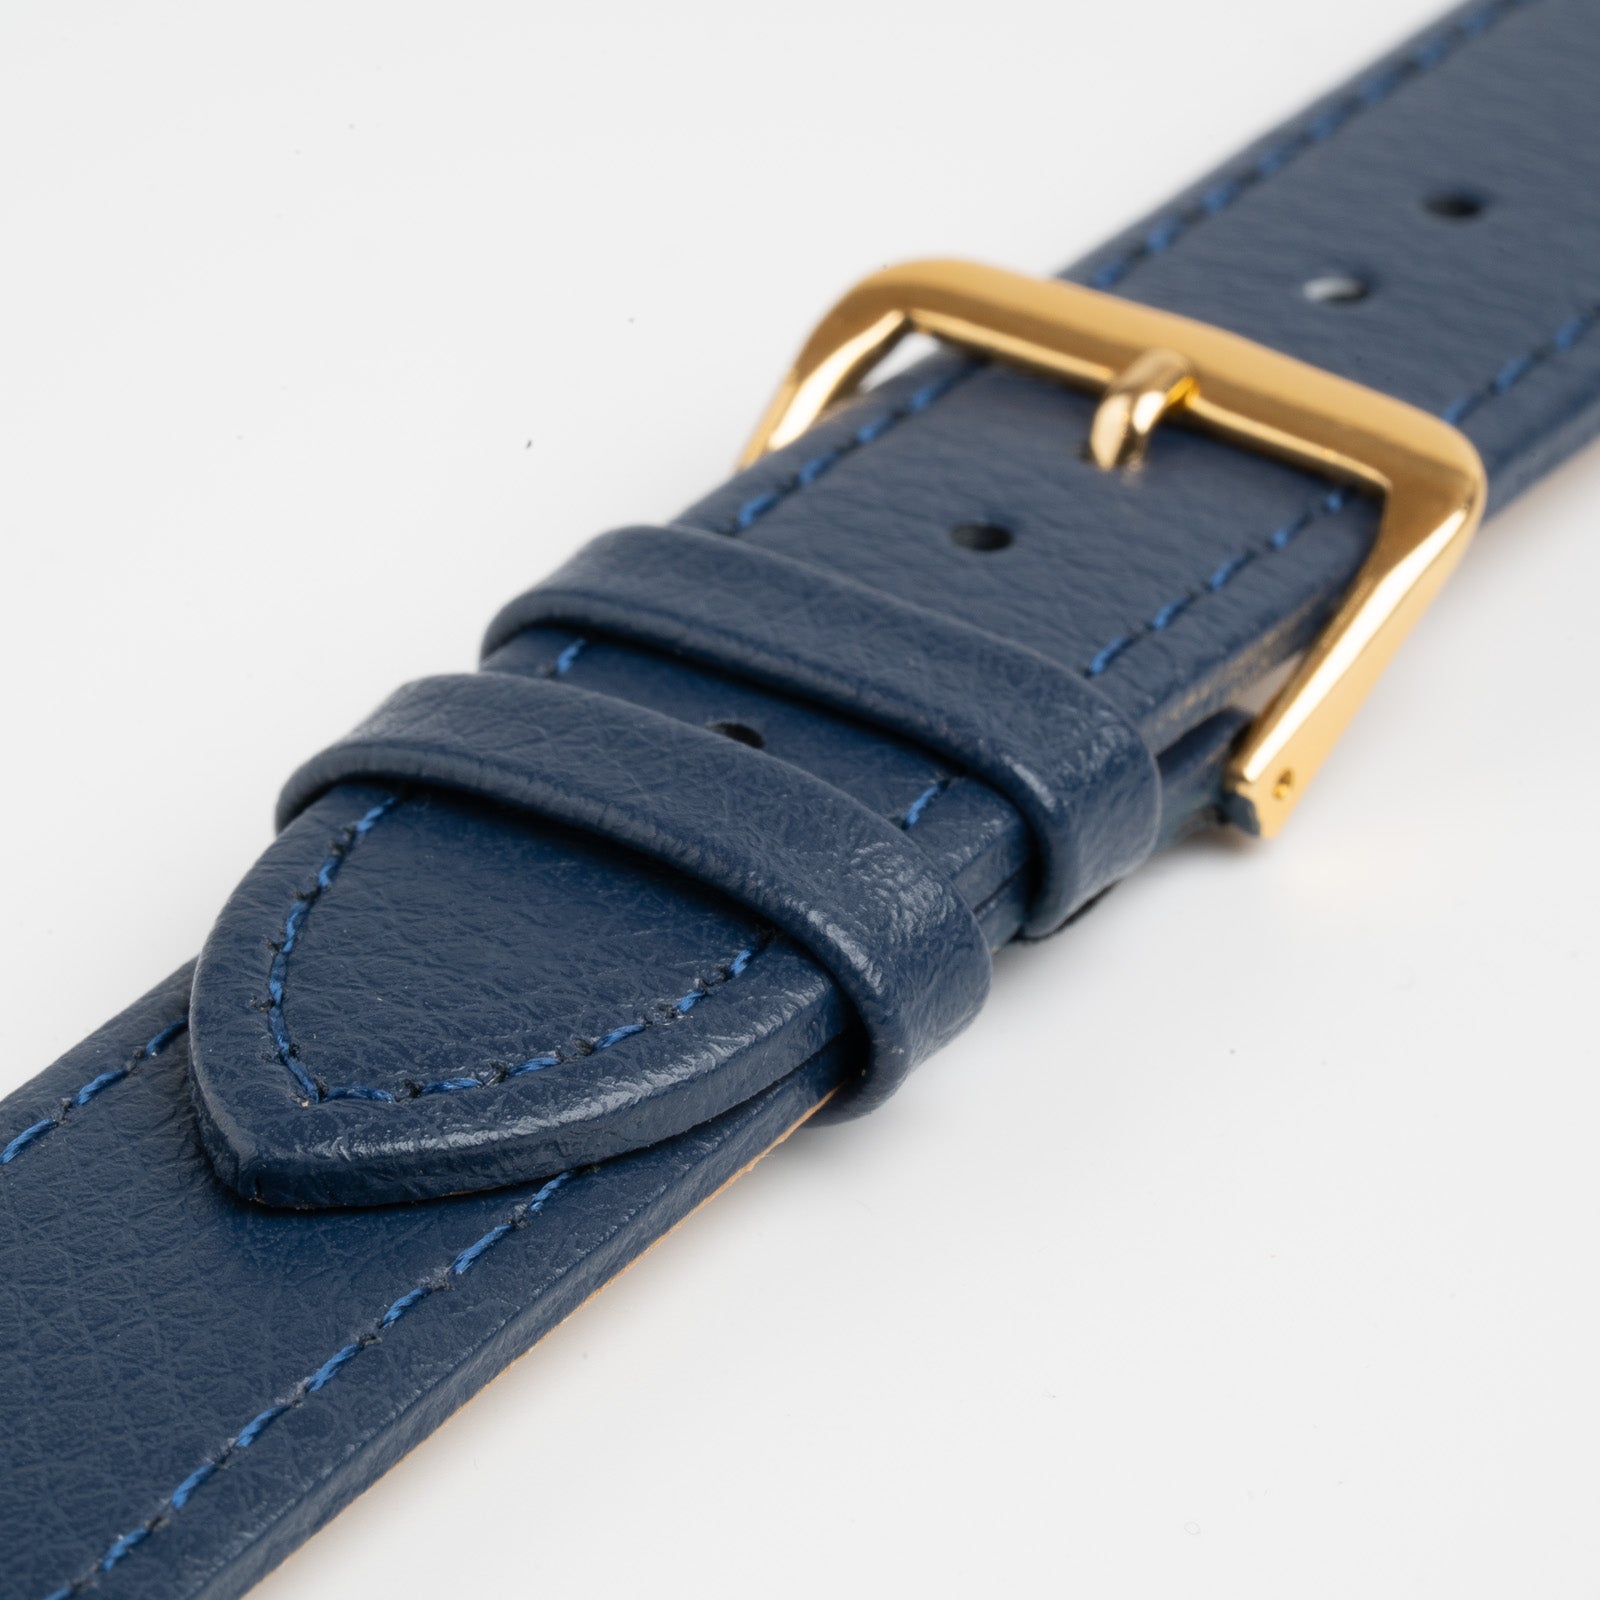 Buffalo Value XL Blue Watch Strap